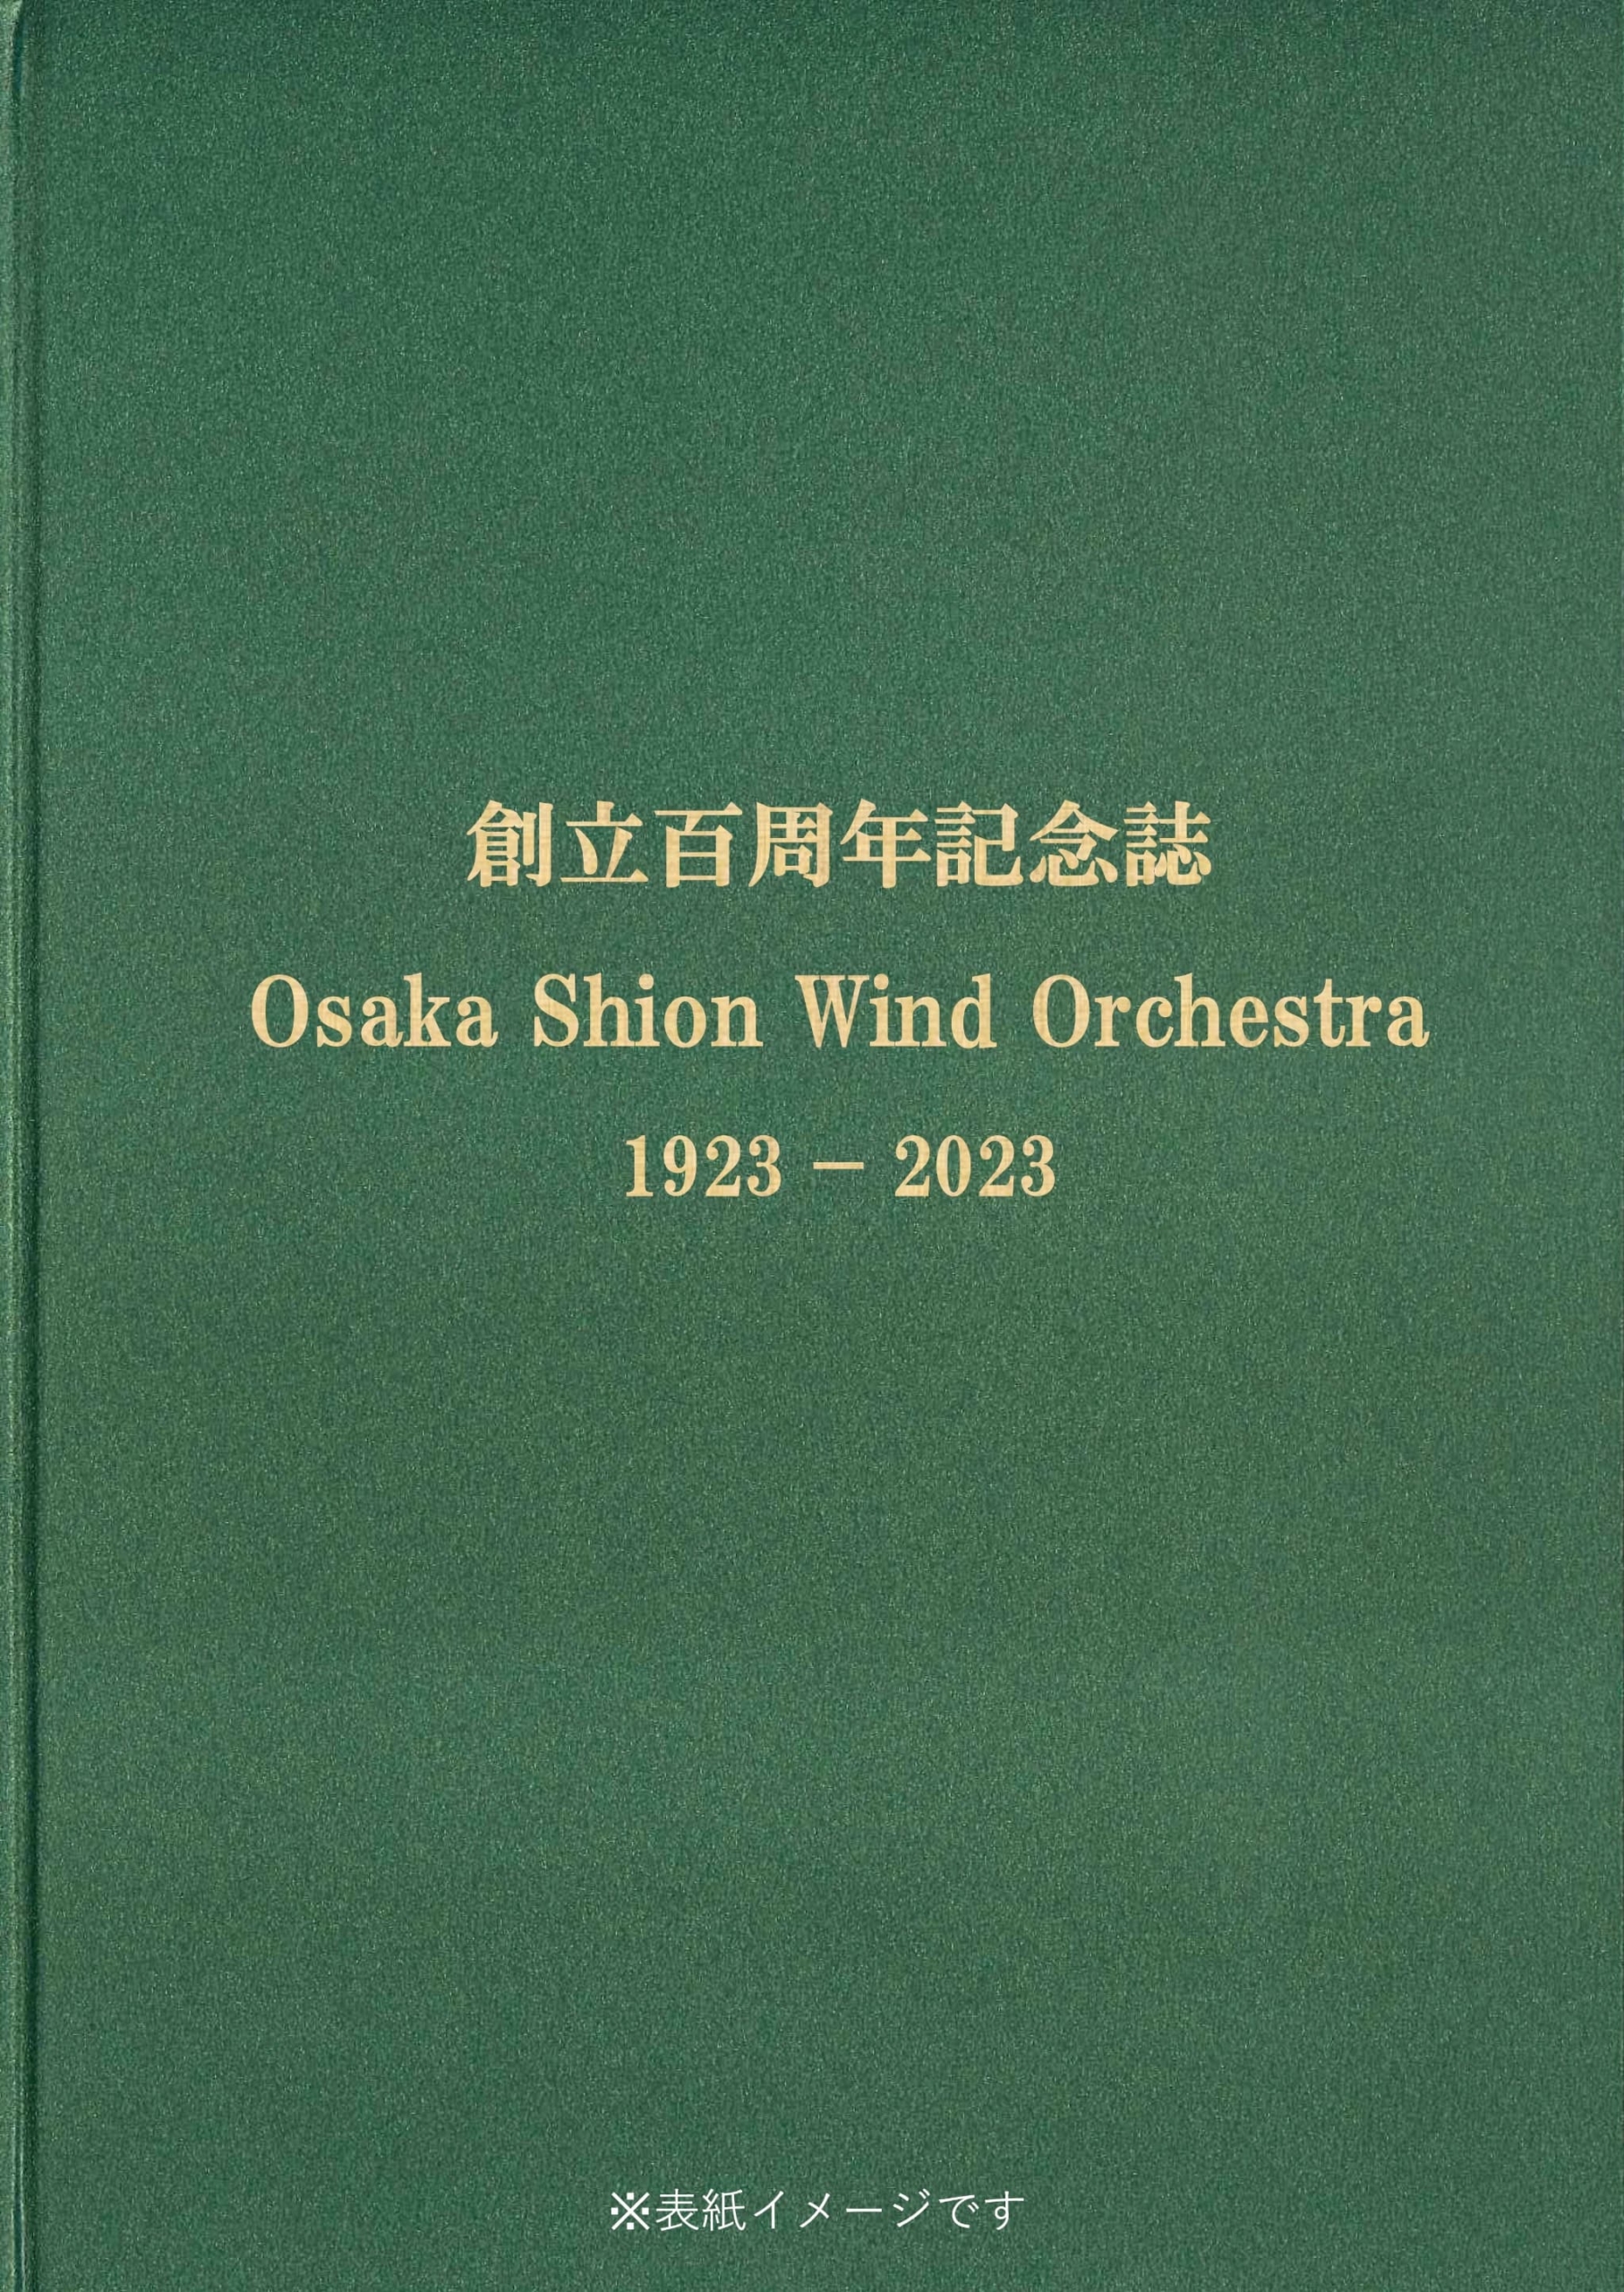 Osaka Shion Wind Orchestra 創立百周年記念誌 販売開始！